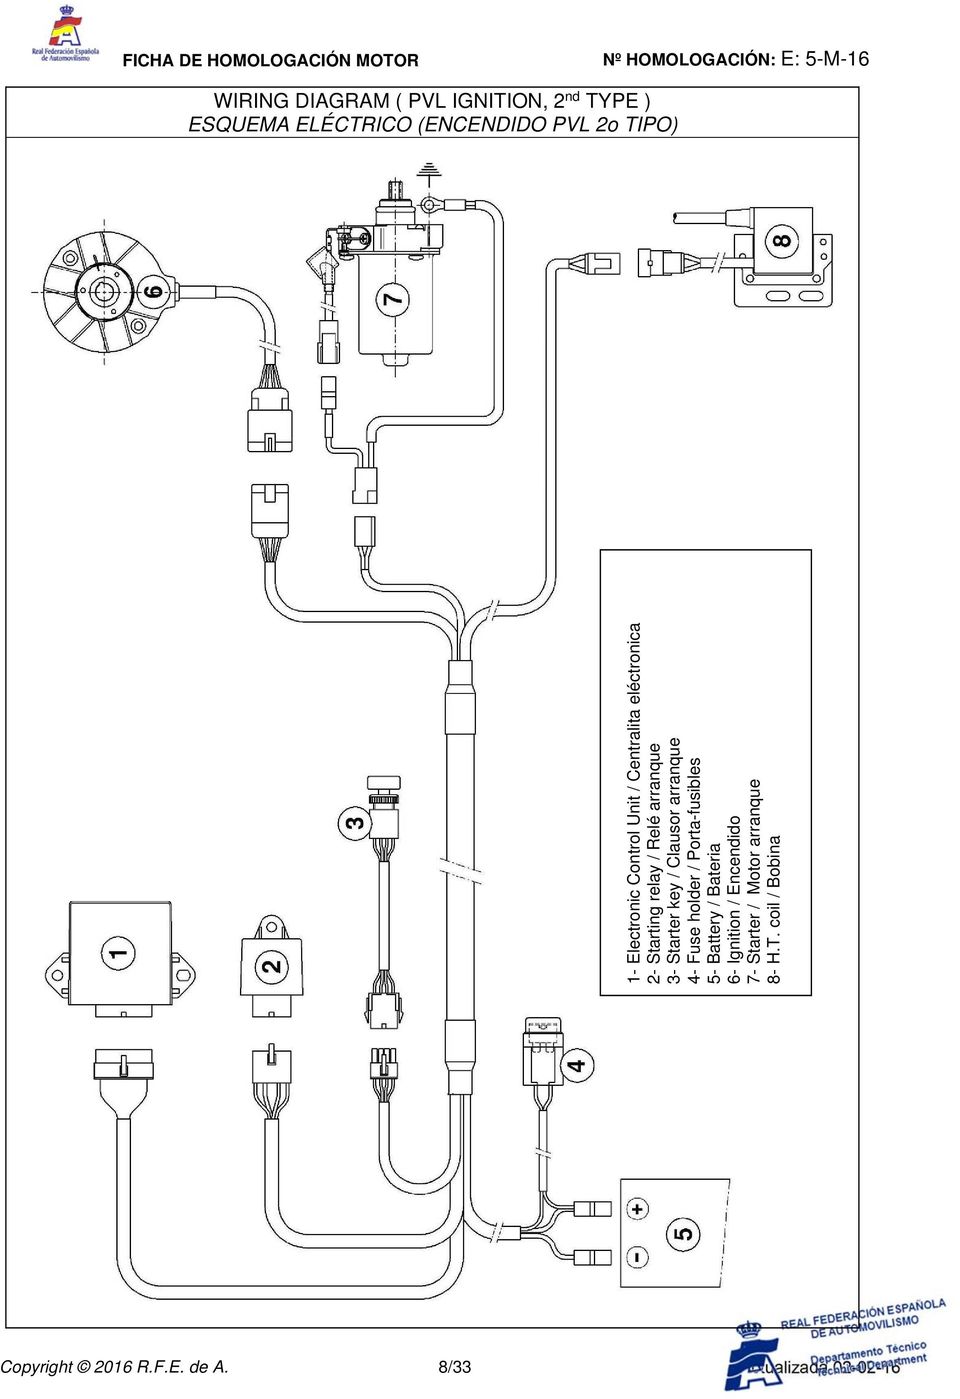 key / Clausor arranque 4- Fuse holder / Porta-fusibles 5- Battery / Bateria 6- Ignition /